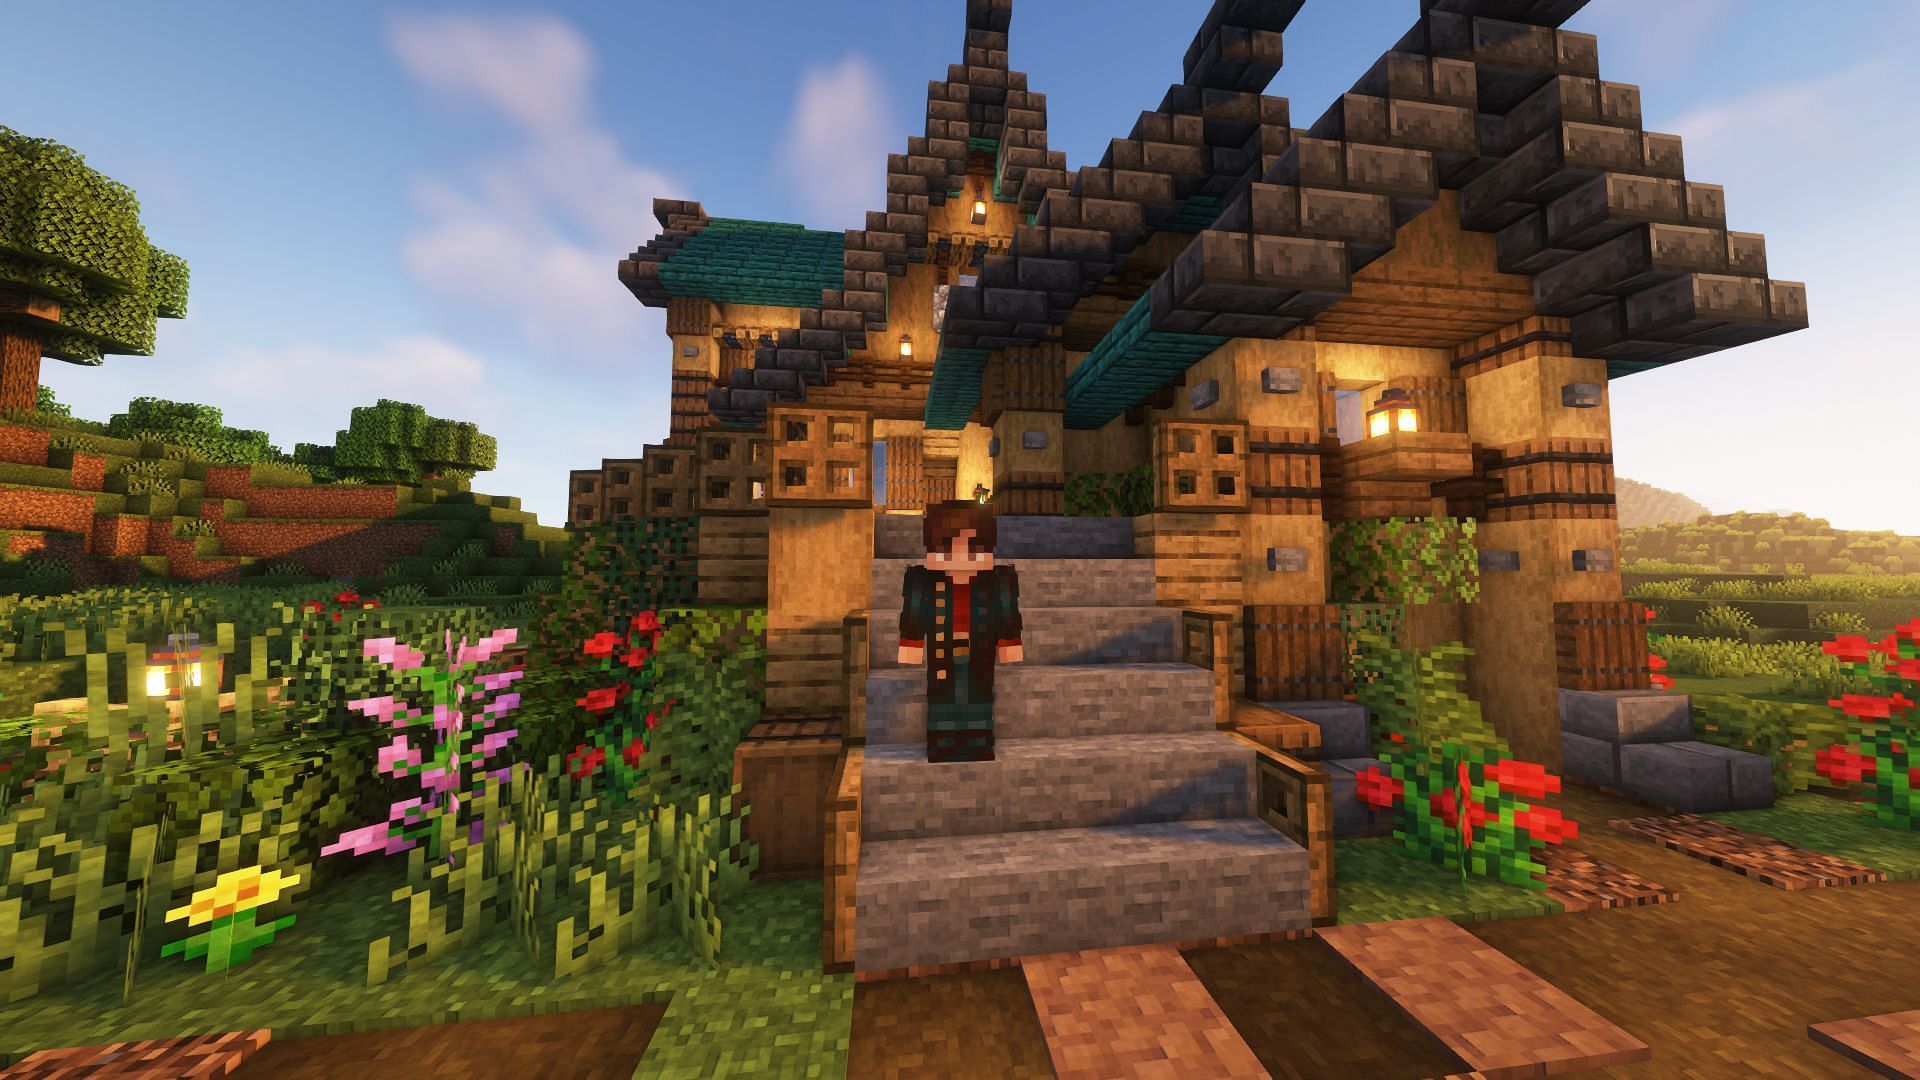 A fantasy house in the game (Image via Mojang)